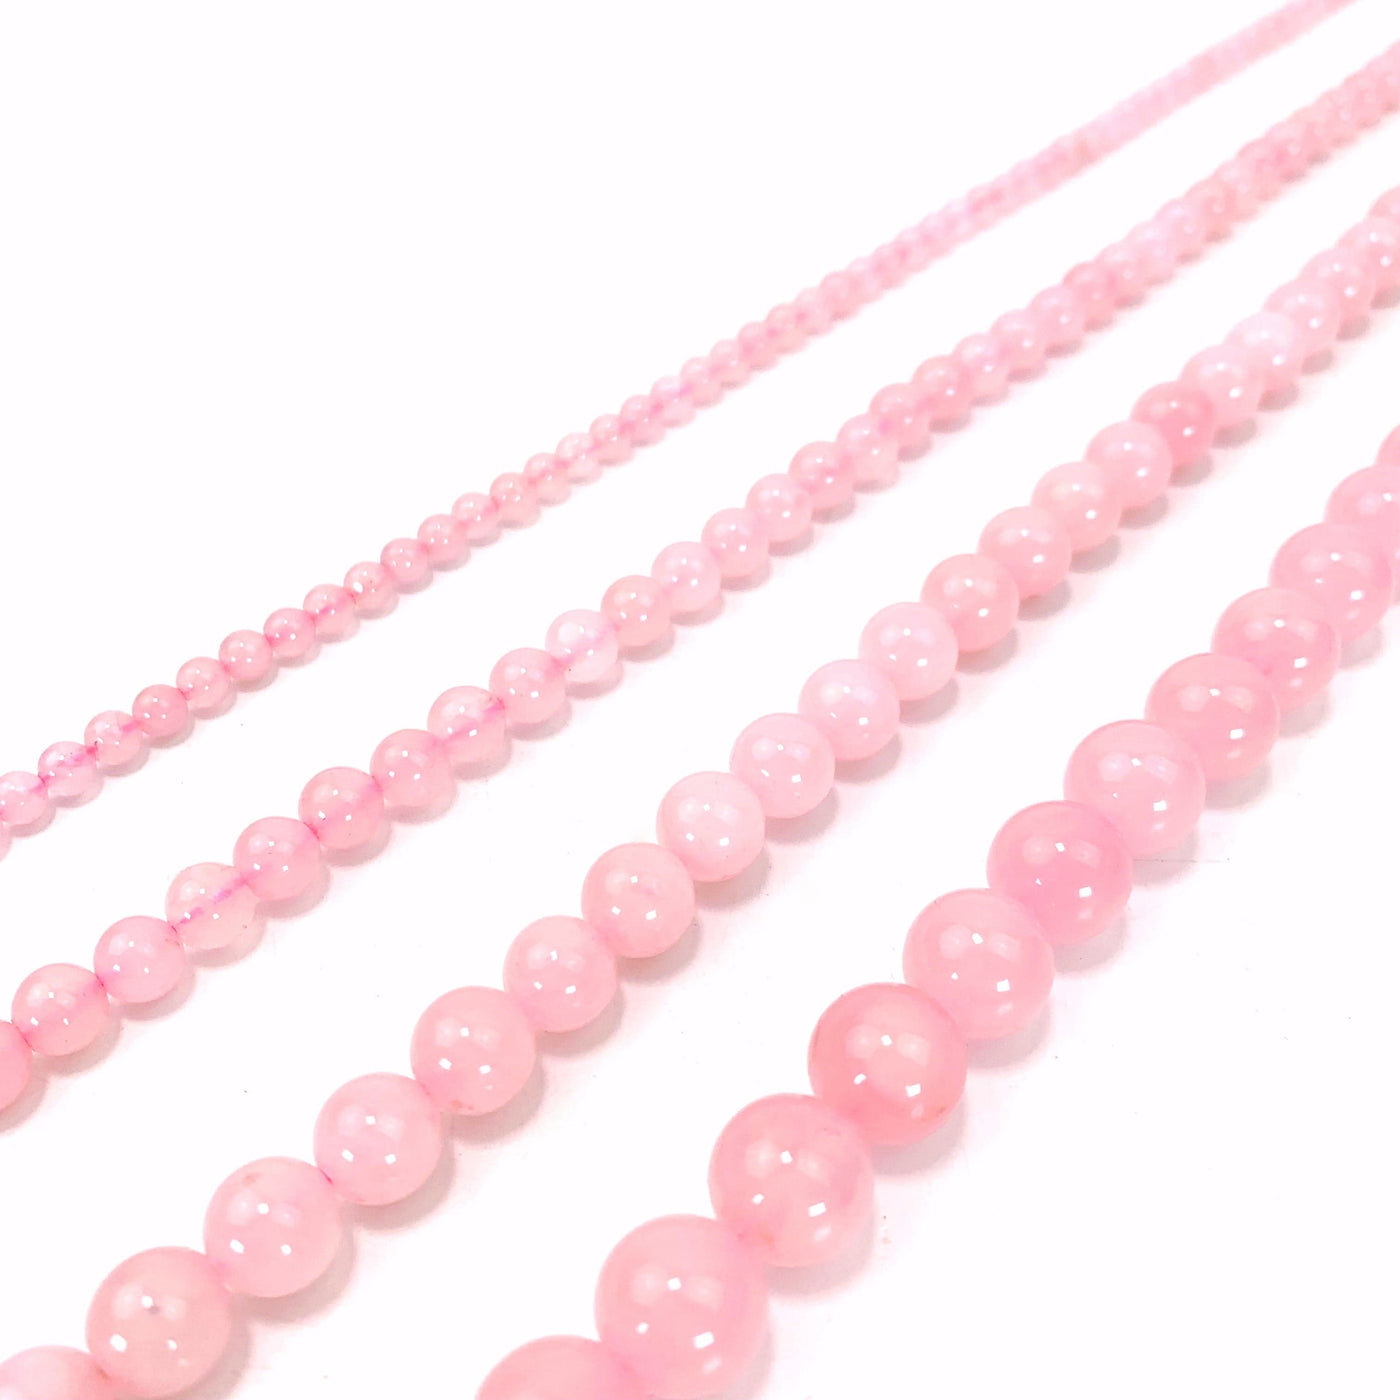 photo of four sizes of rose quartz beads on a white background